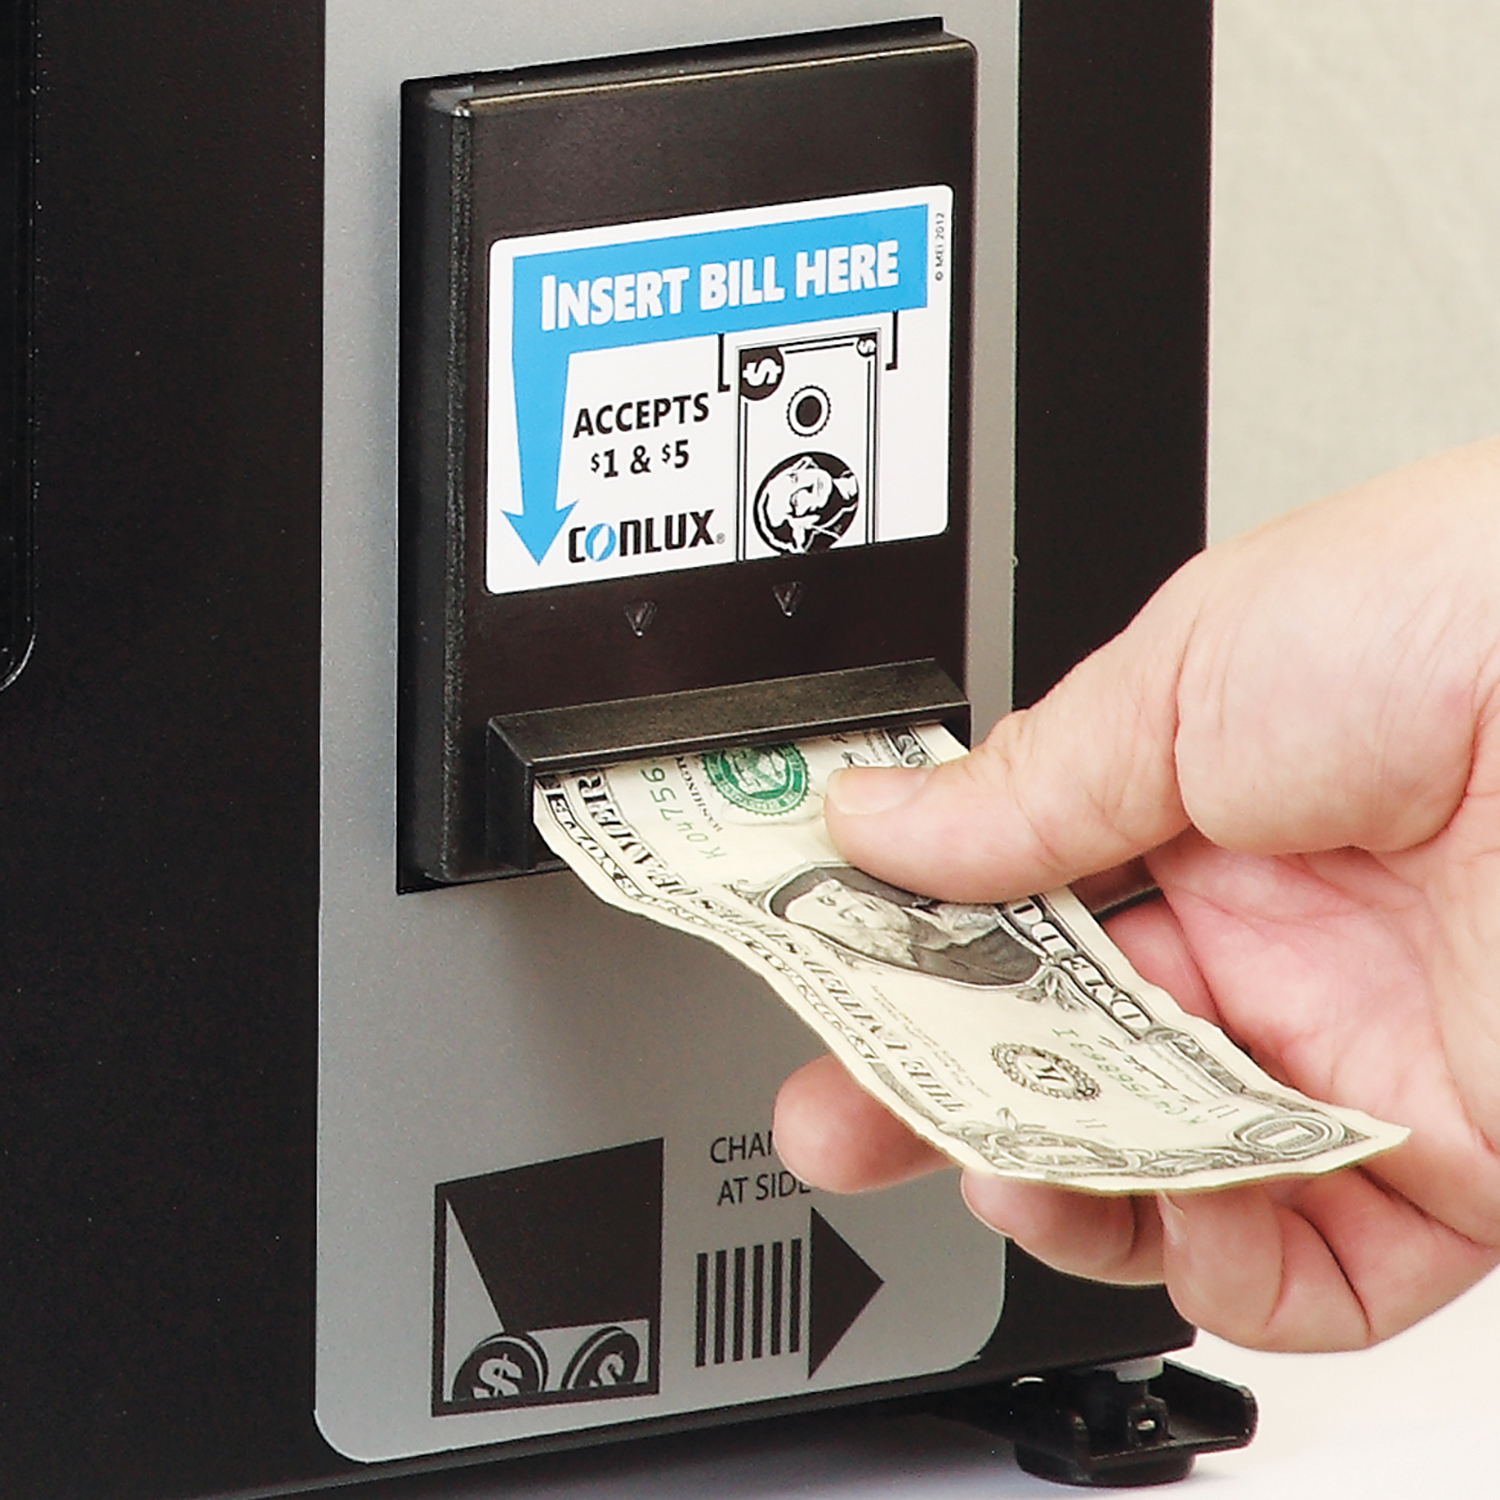 Customer inserting a $1 bill into a vending machine using the standard bill acceptor.